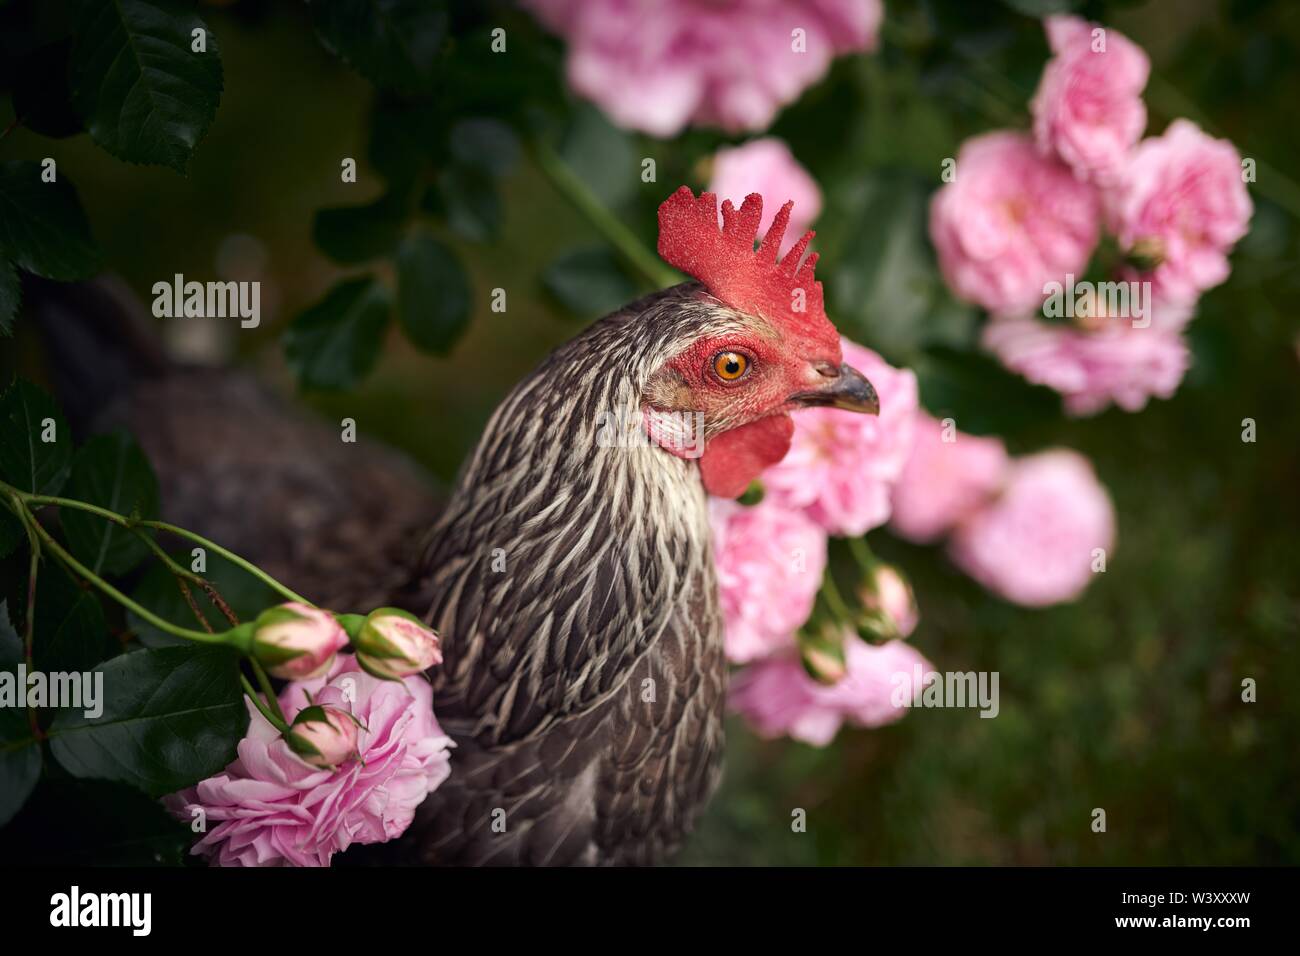 Free-running grey Domestic Chicken (Gallus gallus domesticus), greener, female, between pink roses, animal portrait, Austria Stock Photo